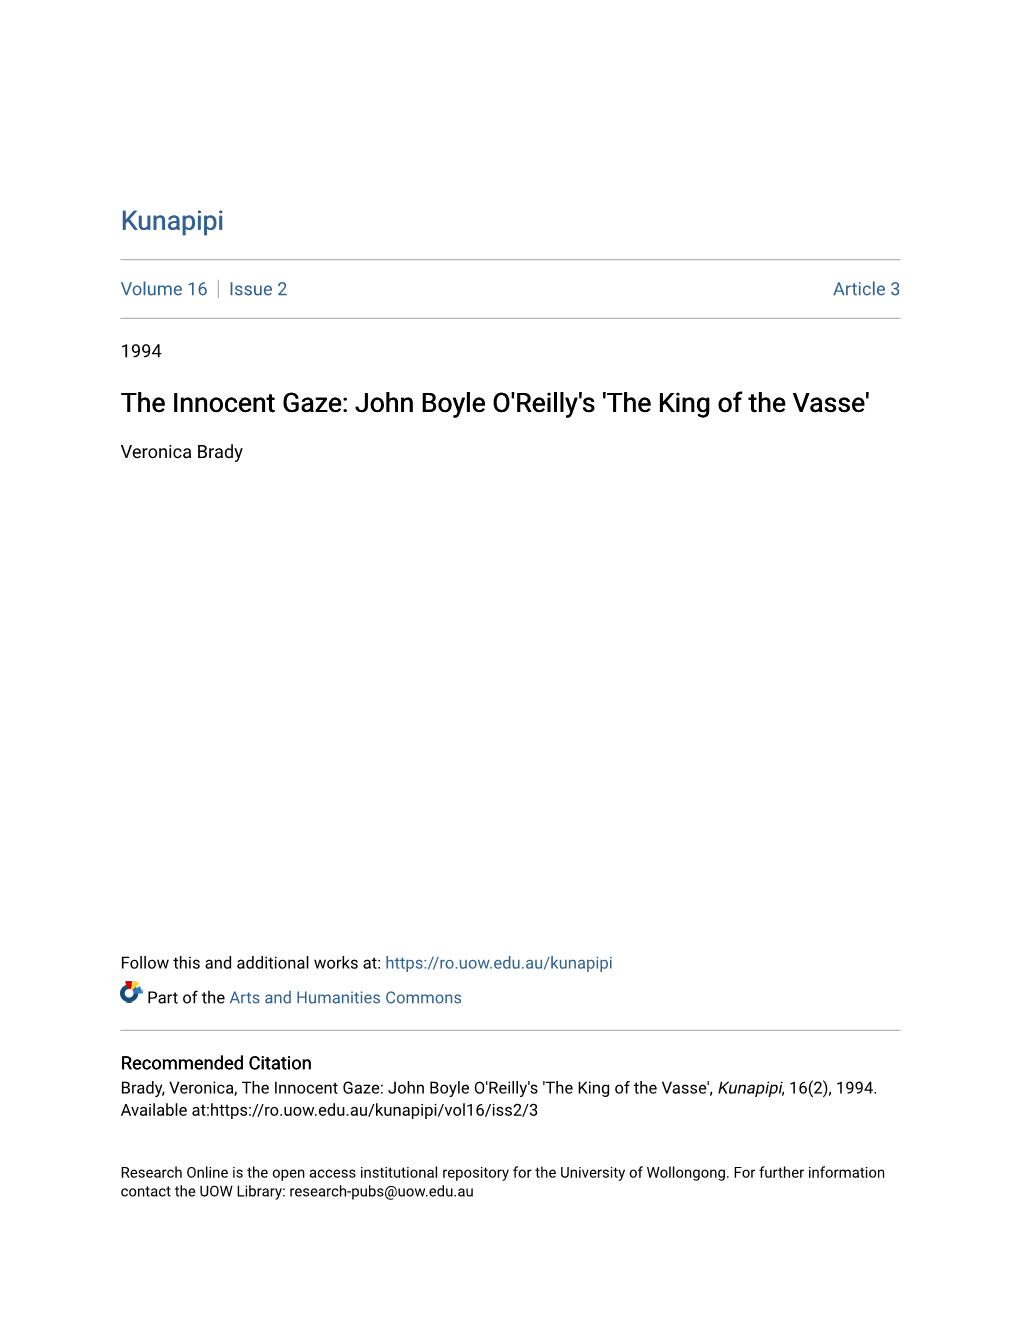 John Boyle O'reilly's 'The King of the Vasse'